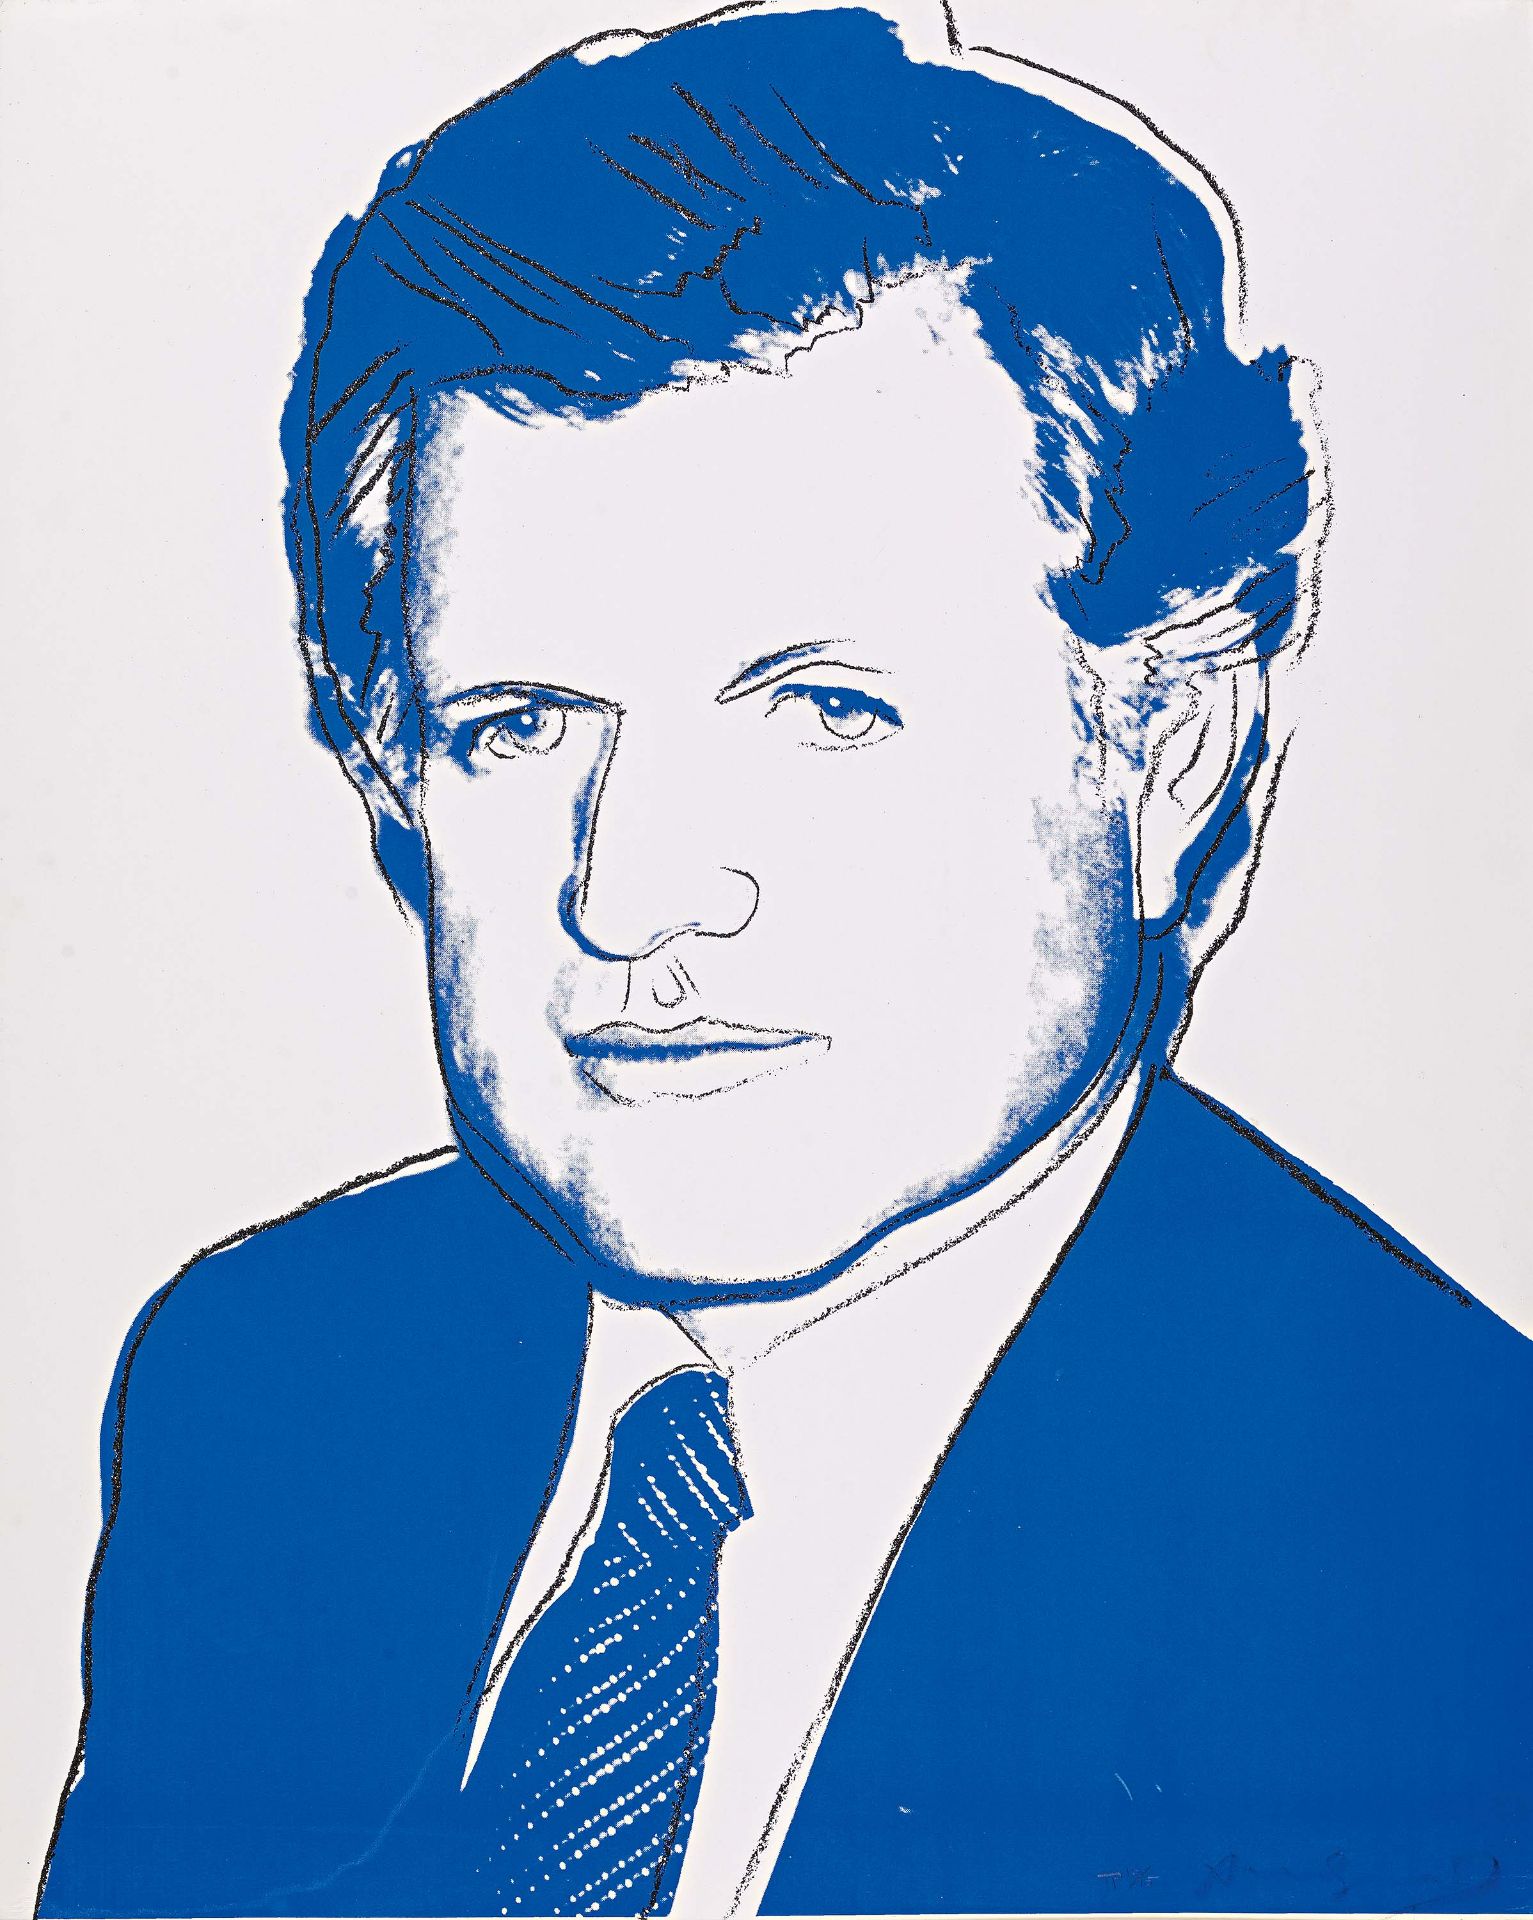 Warhol, Andy1928 Pittsburgh - 1987 New YorkEdward Kennedy. 1980. Colour silkscreen and diamond